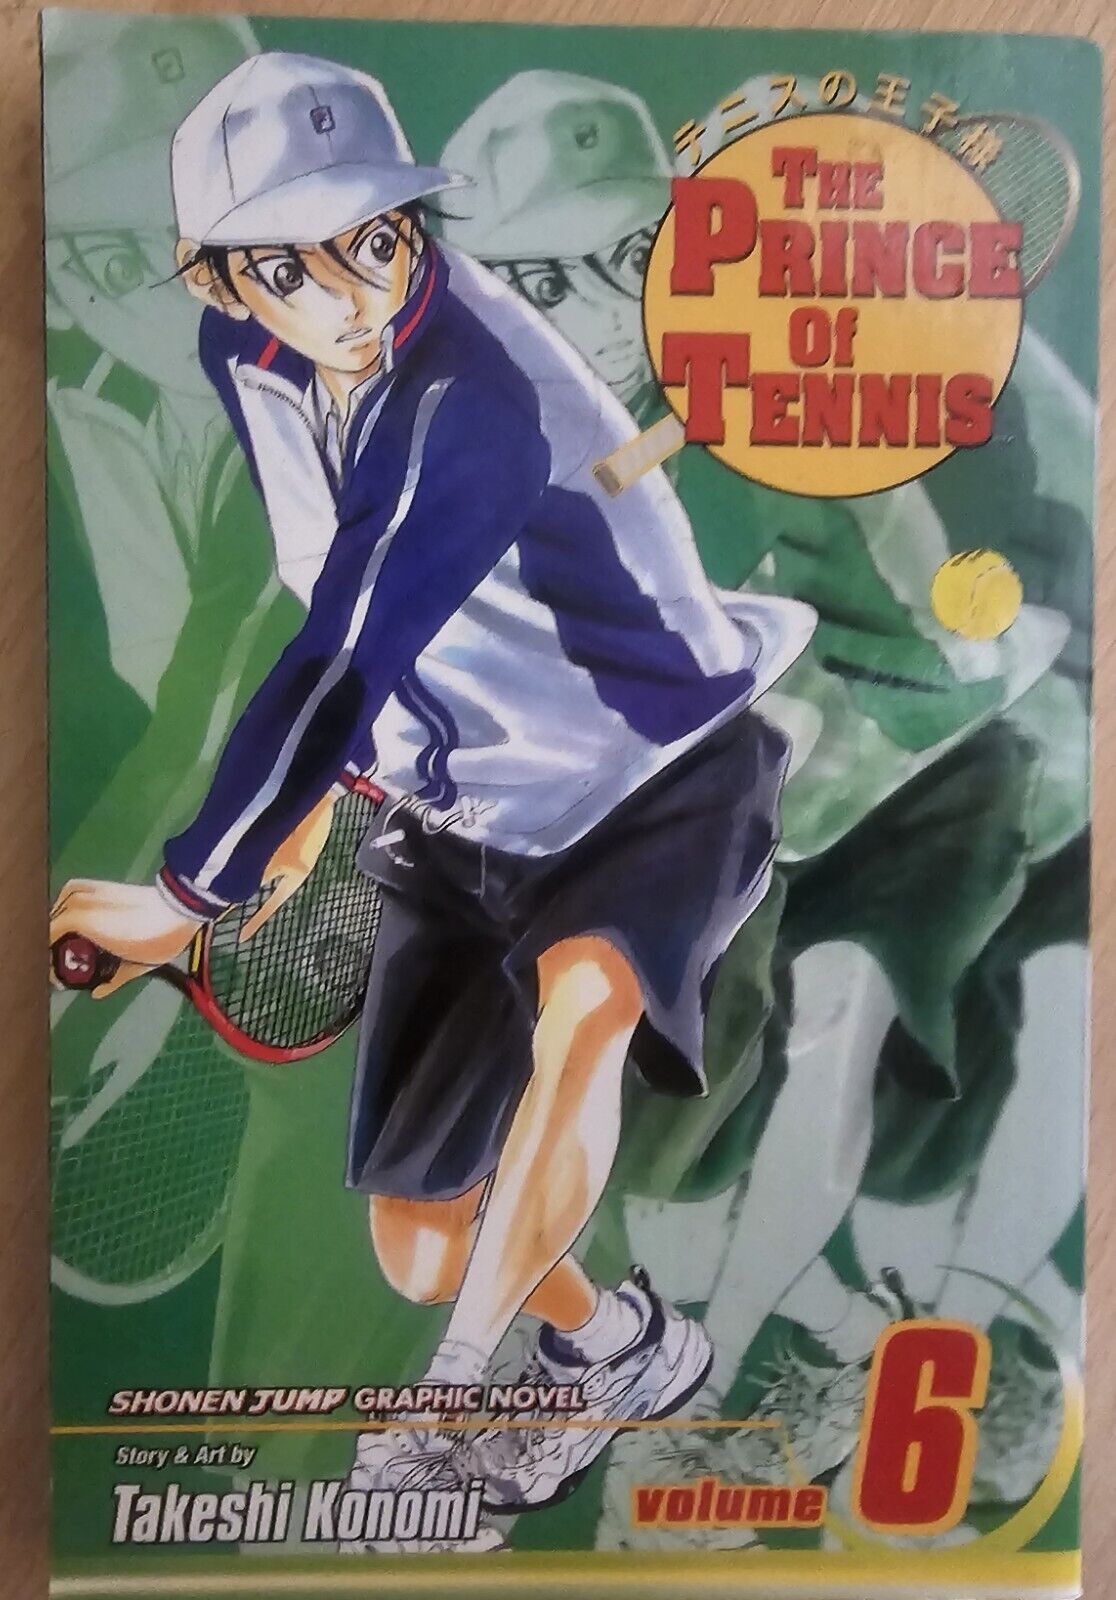 The Prince of Tennis #6 (February 2005) VIZ